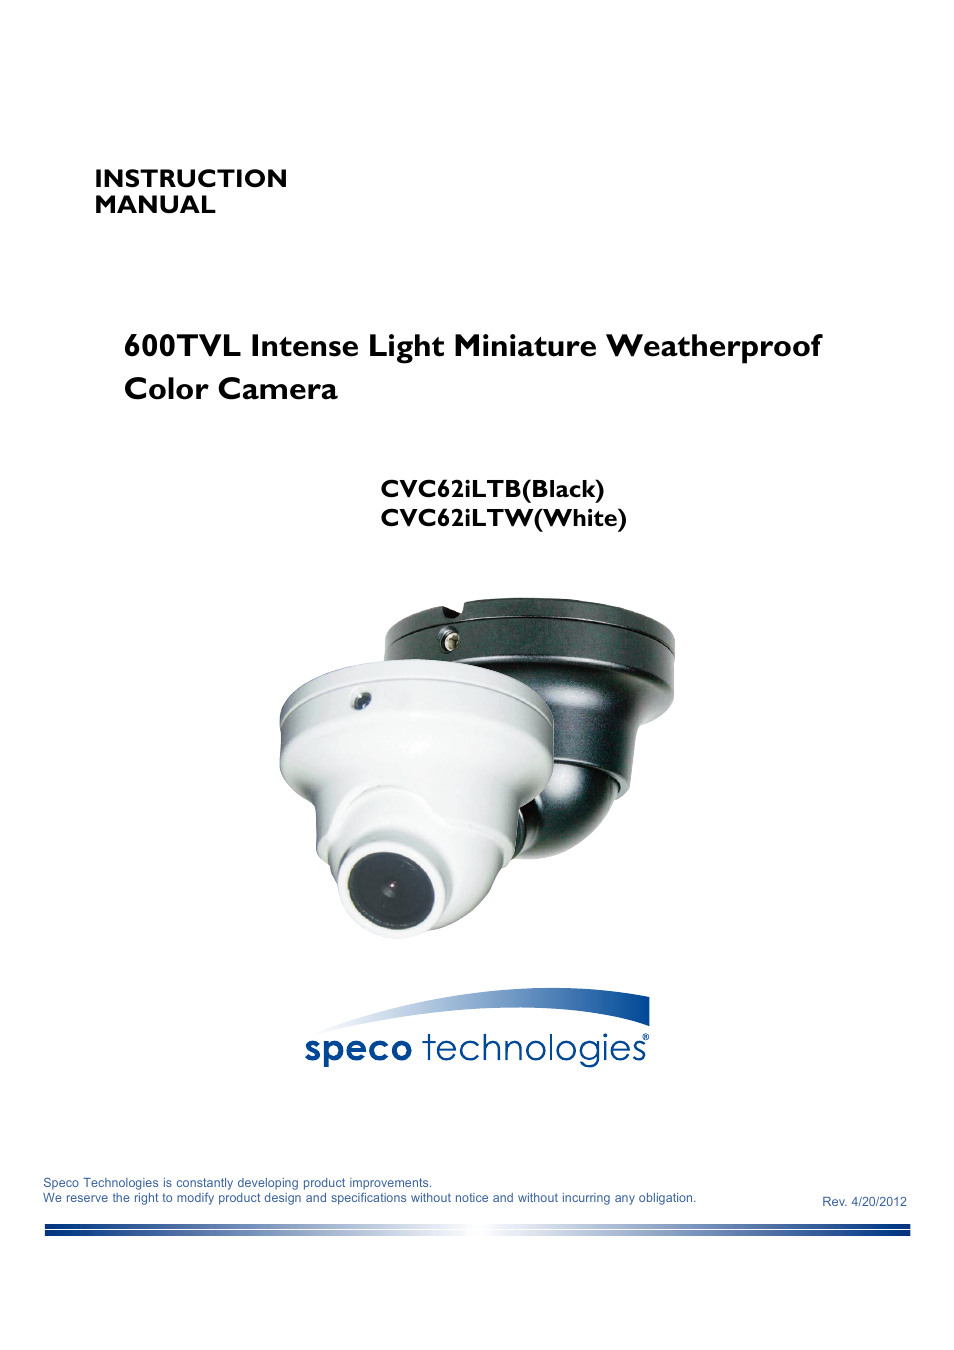 600TVL Intense Light Minature Weatherproof Color Camera CVC 62iLTB